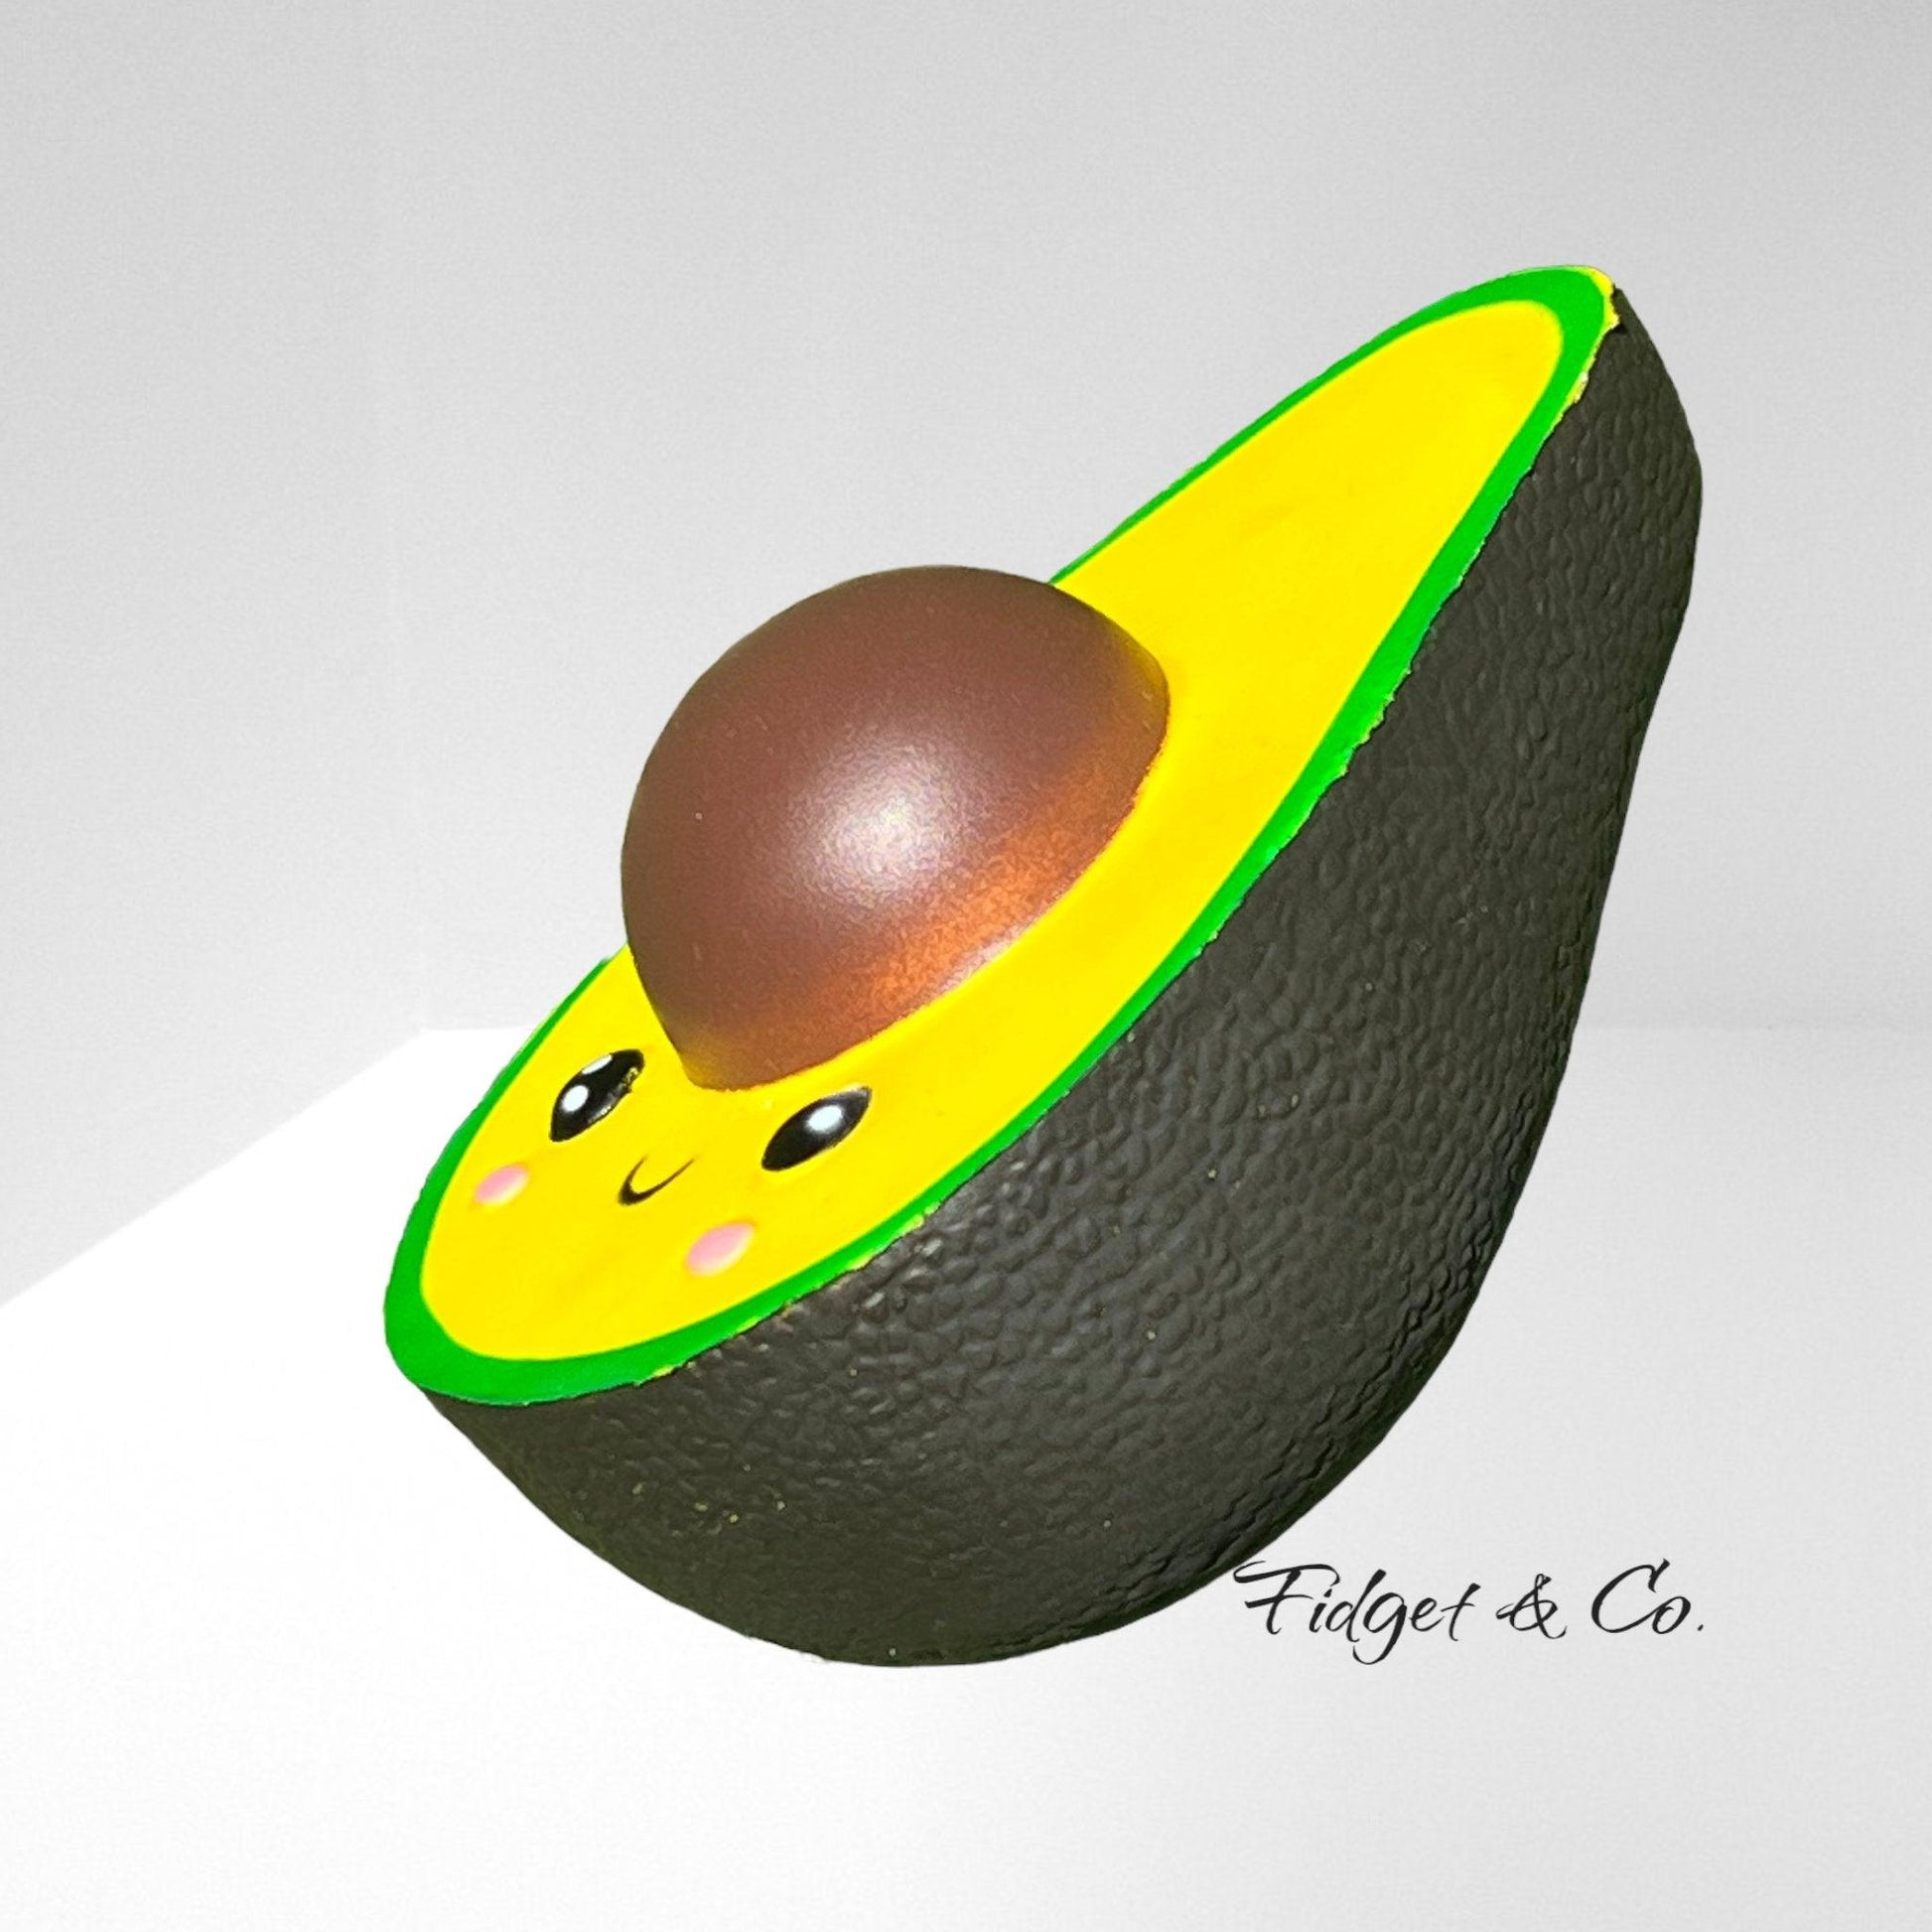 Squishy Stress Ball - Avocado - Fidget & Co.